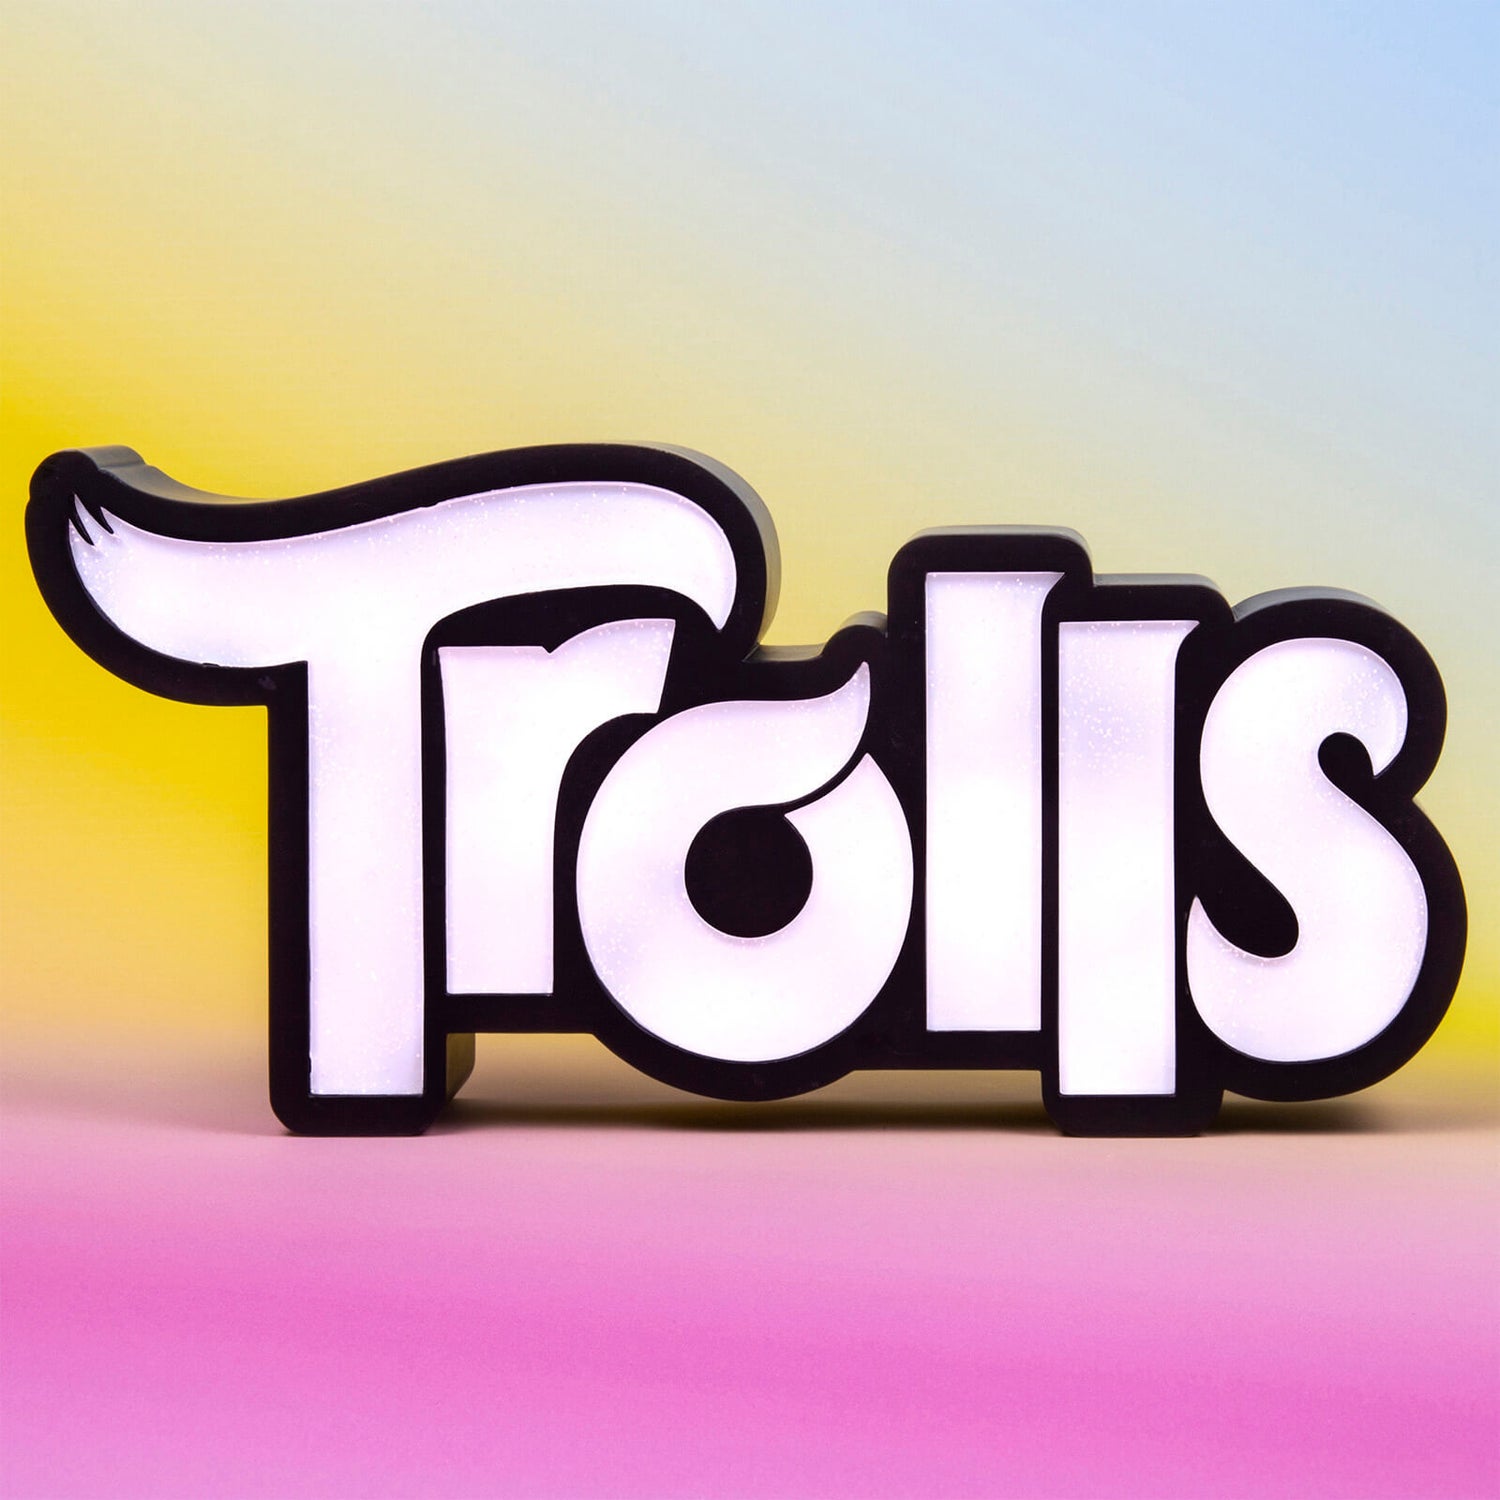 Trolls Logo Light